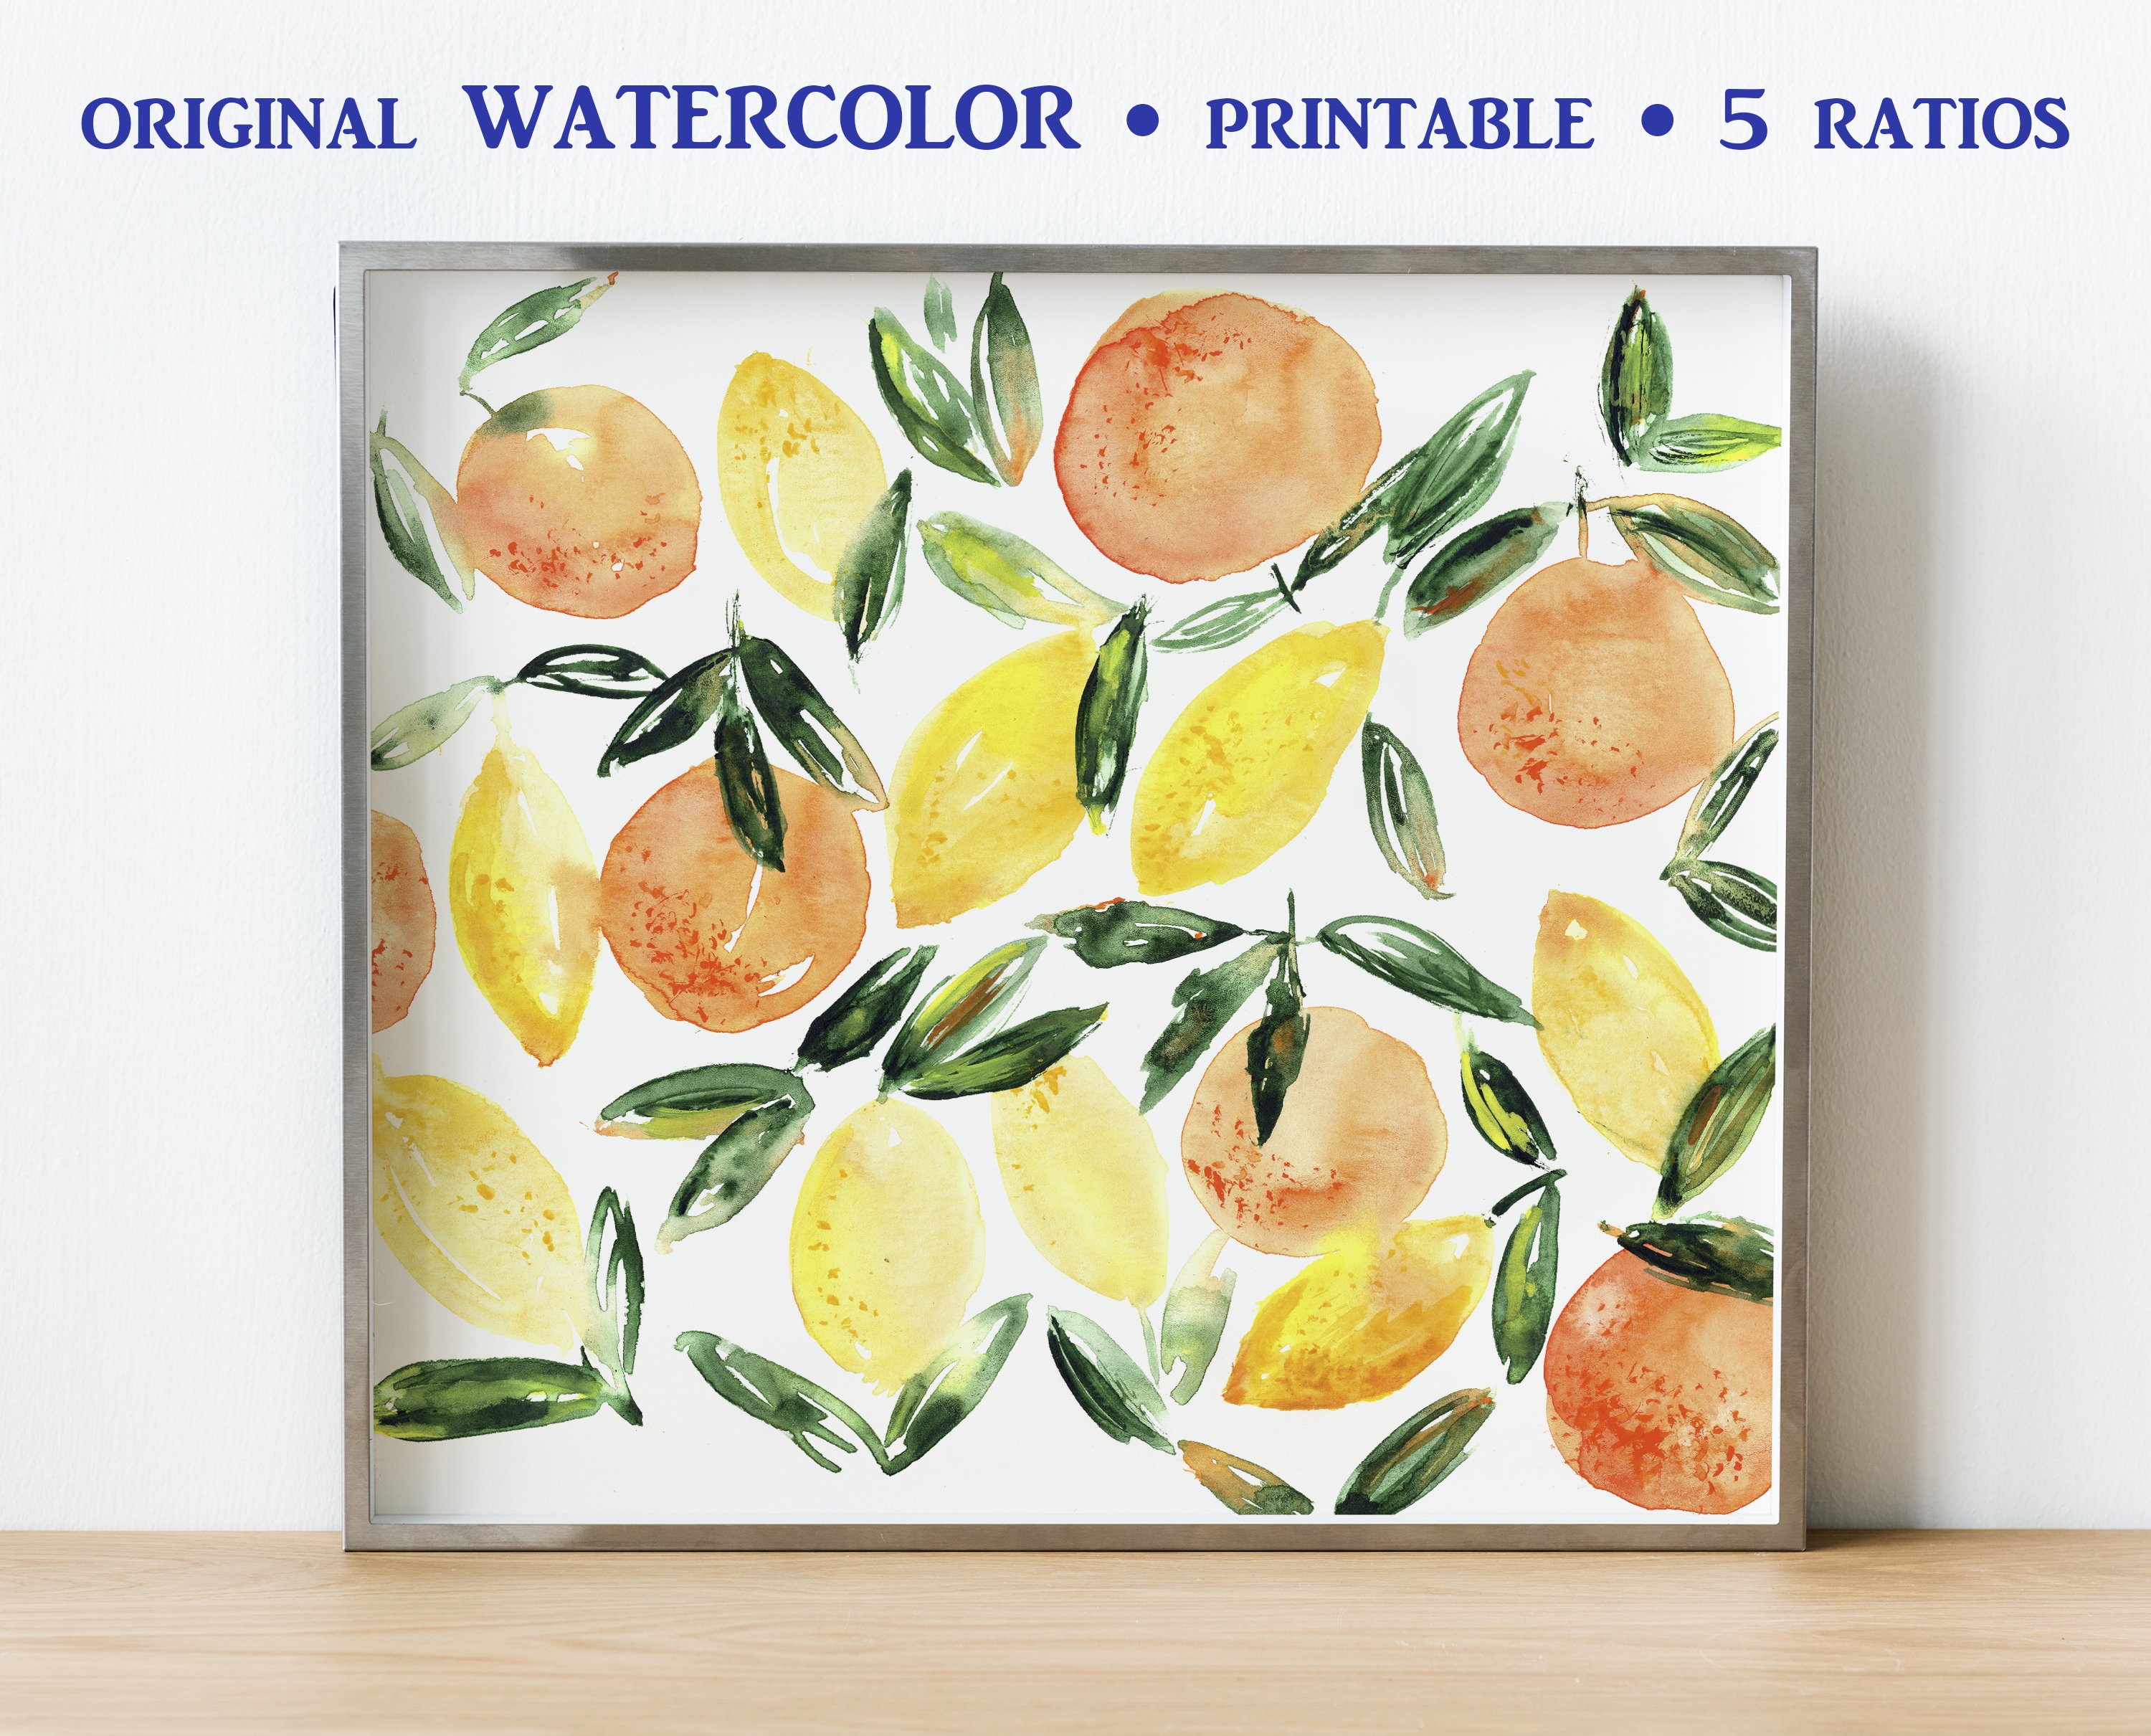 Watercolor orange-lemon art/pattern preview image.